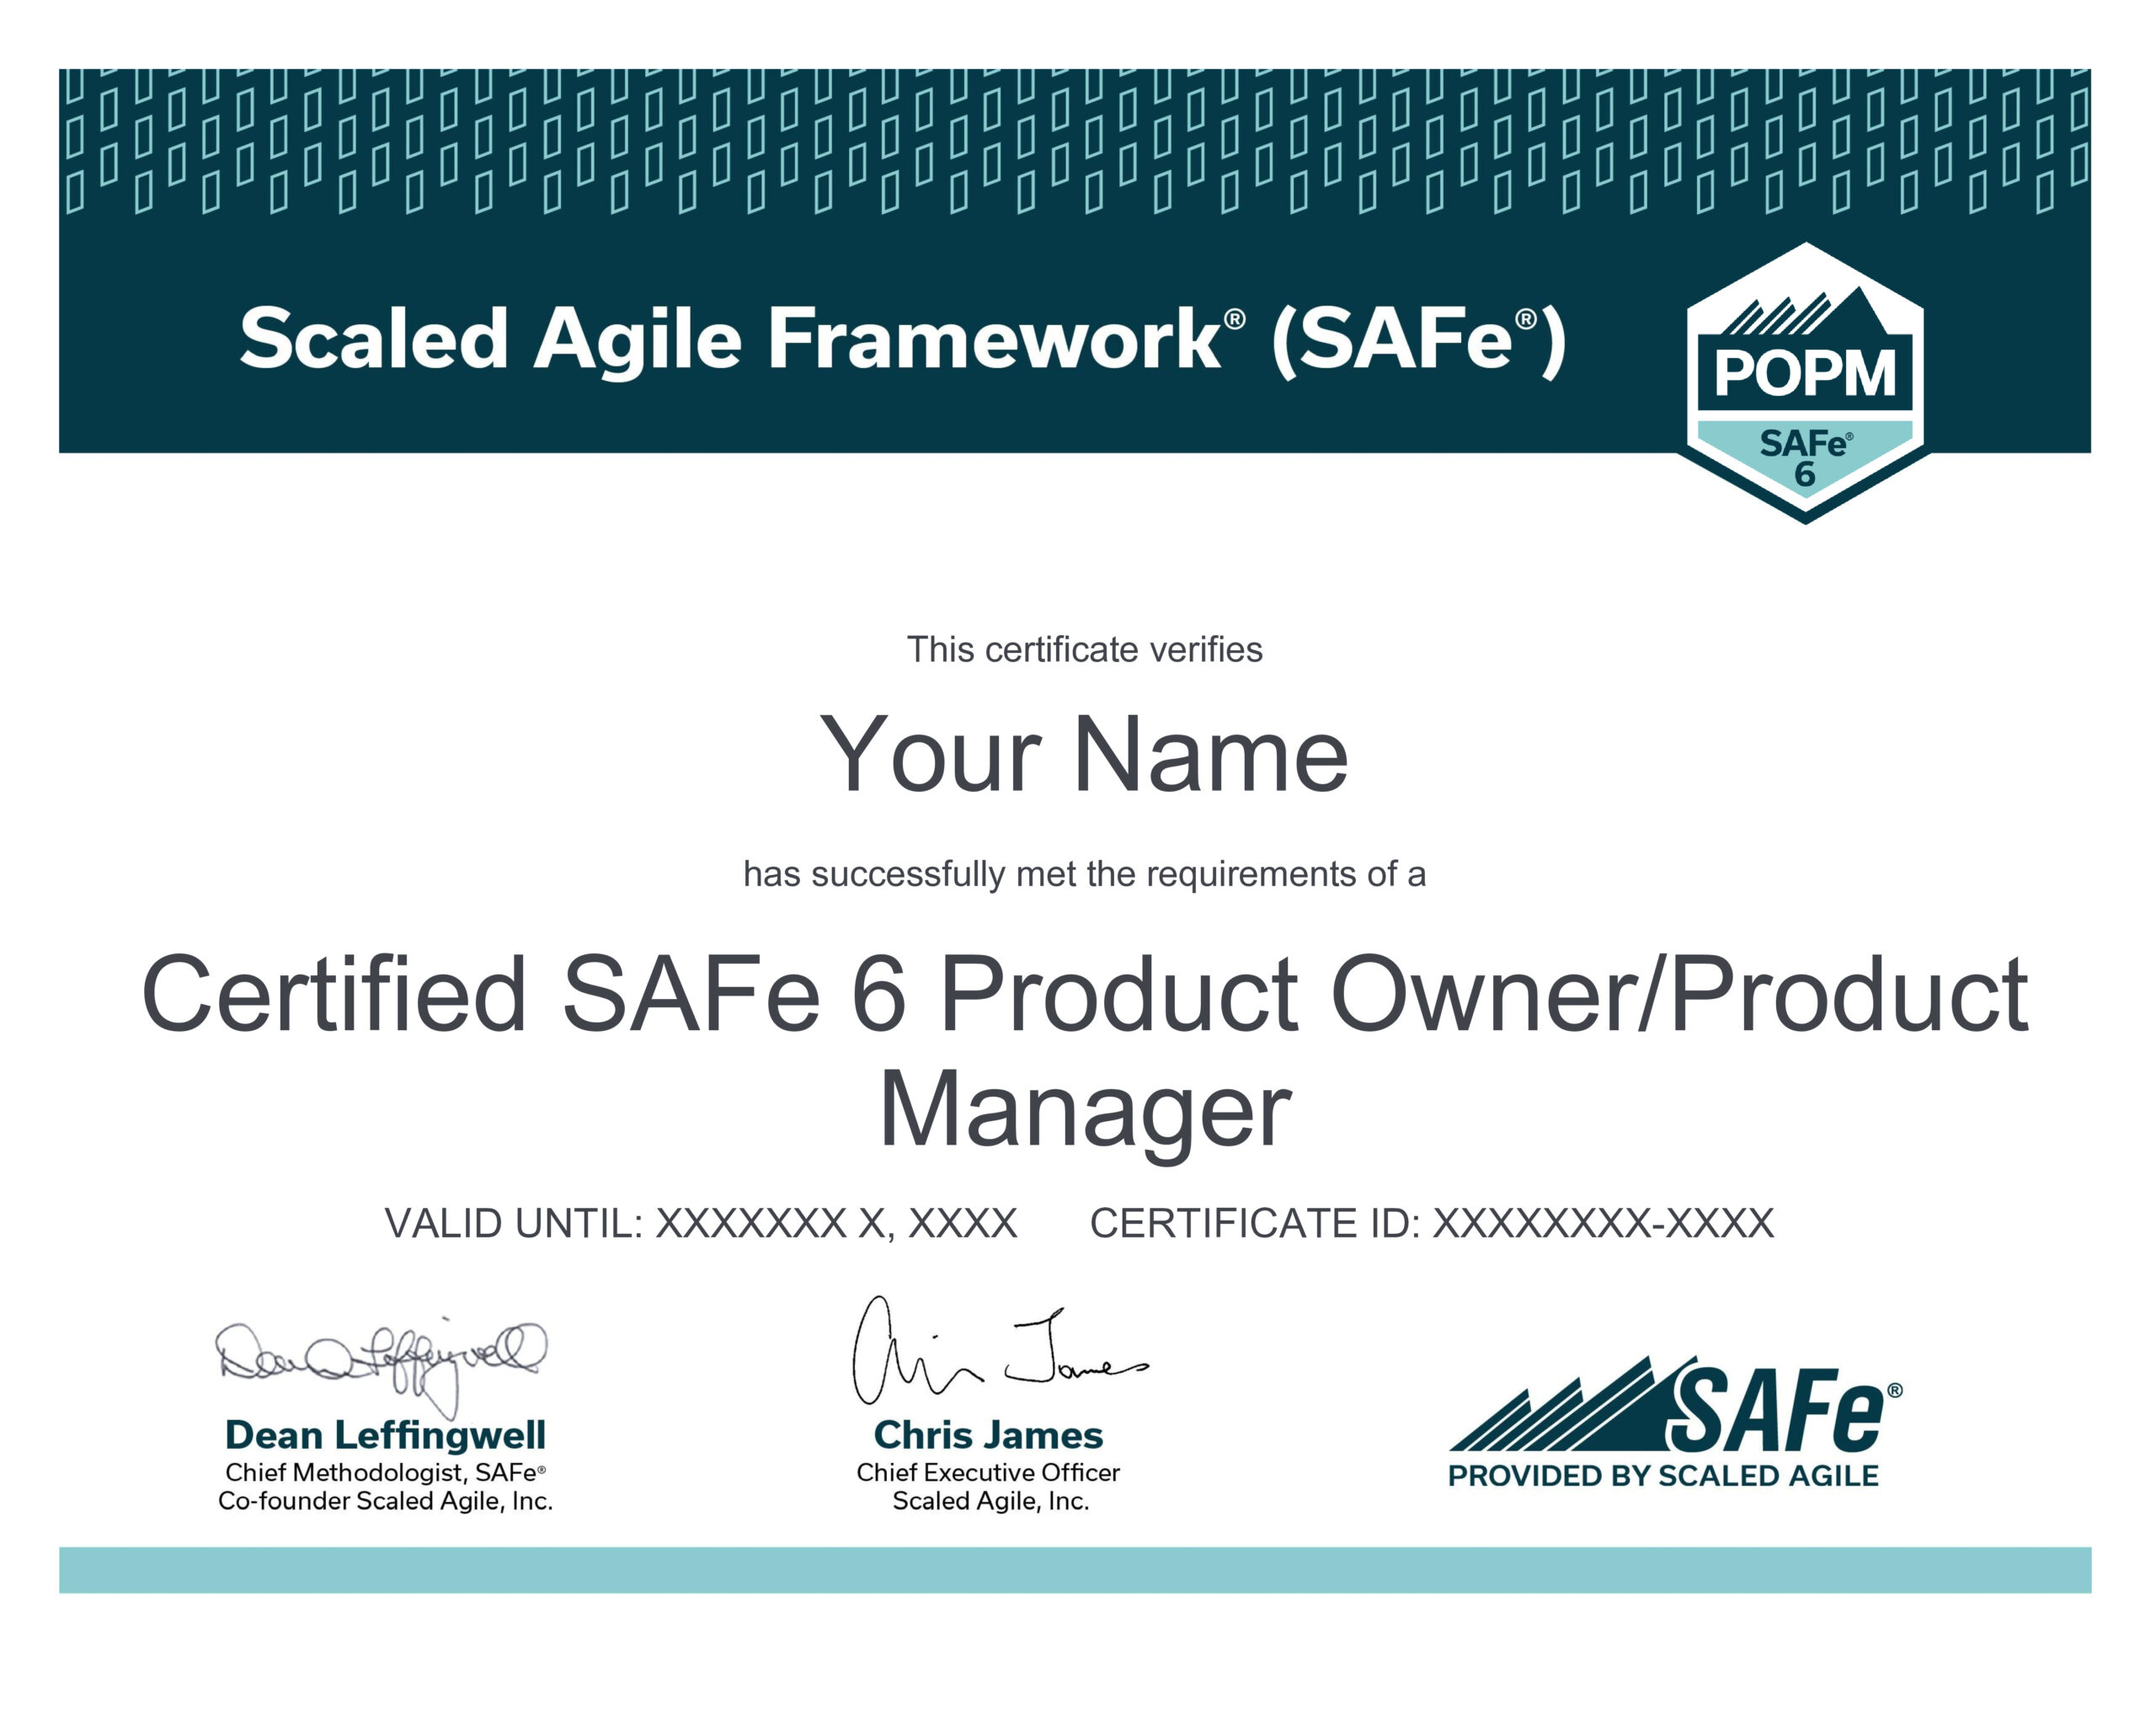 SAFe POPM Sample Certificate